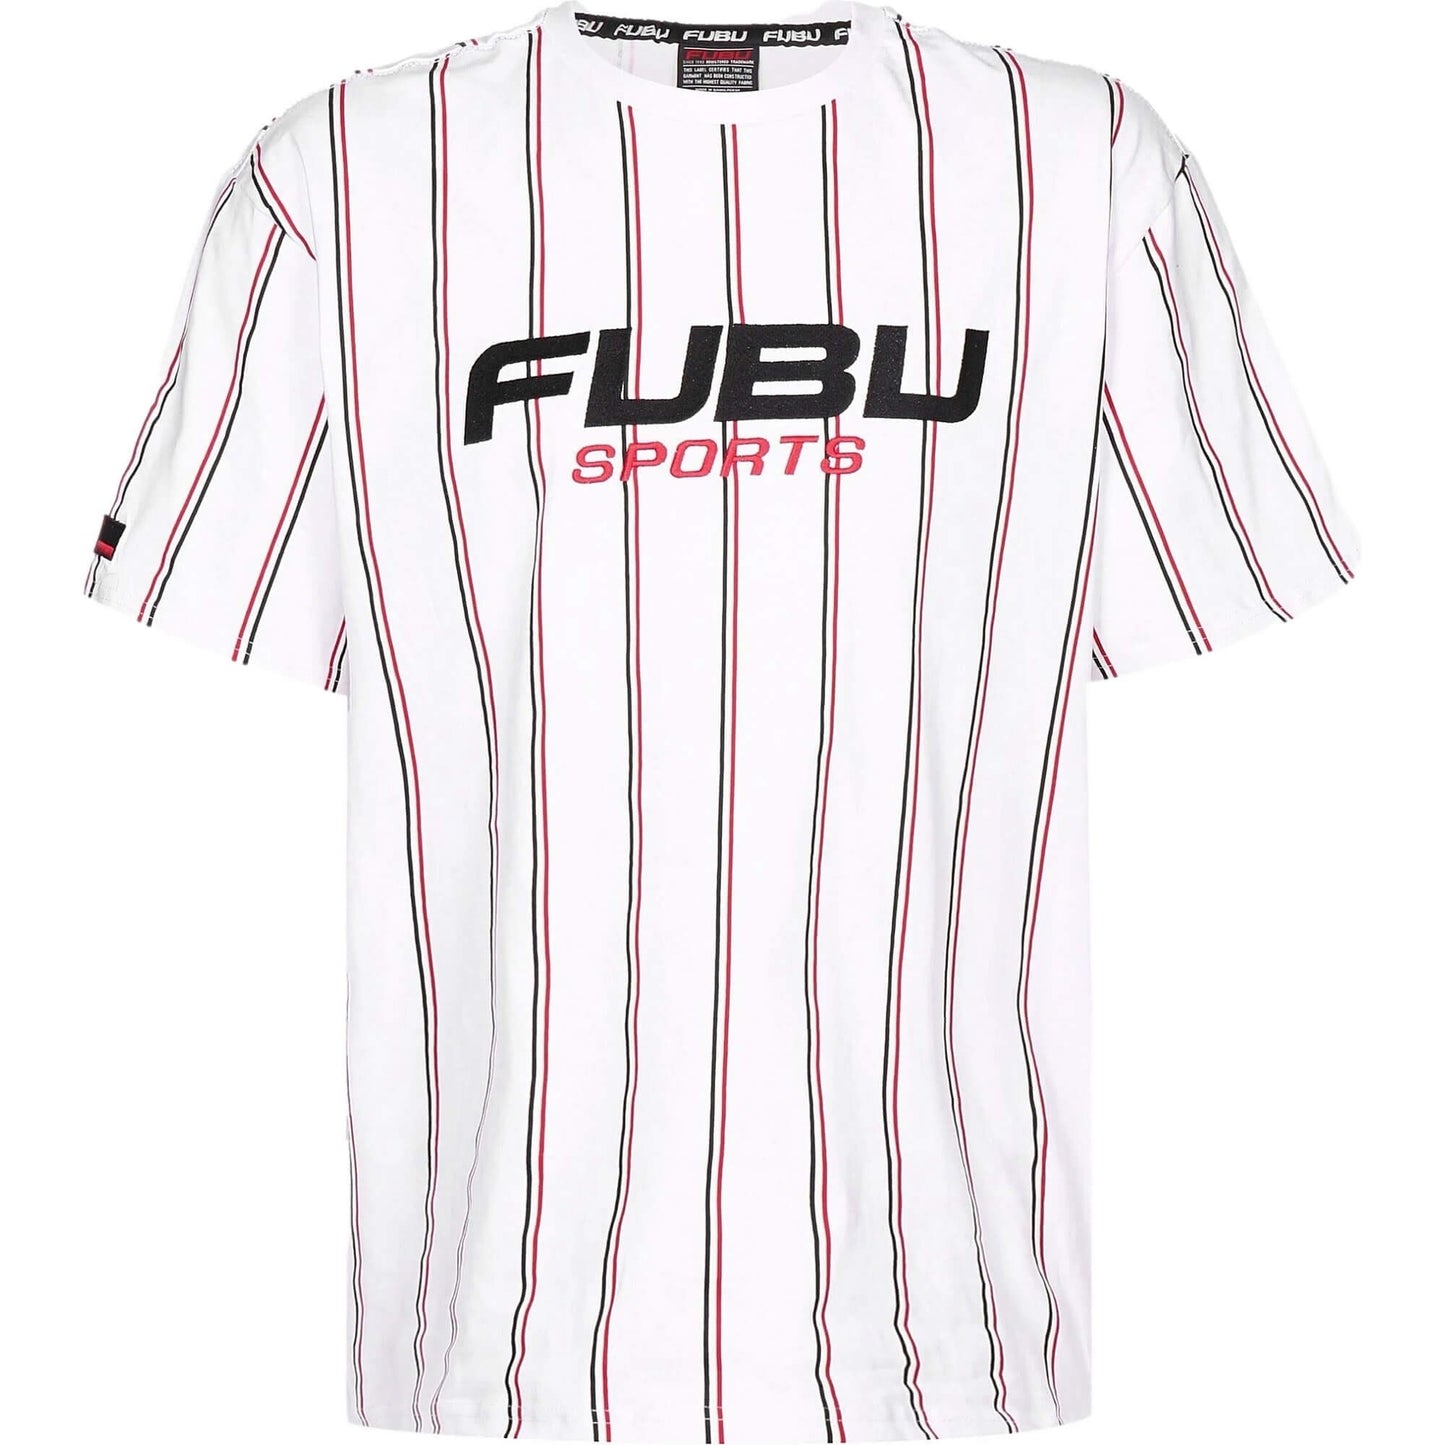 FUBU Corporate Sprts Pinstripe Tee white/black/red white